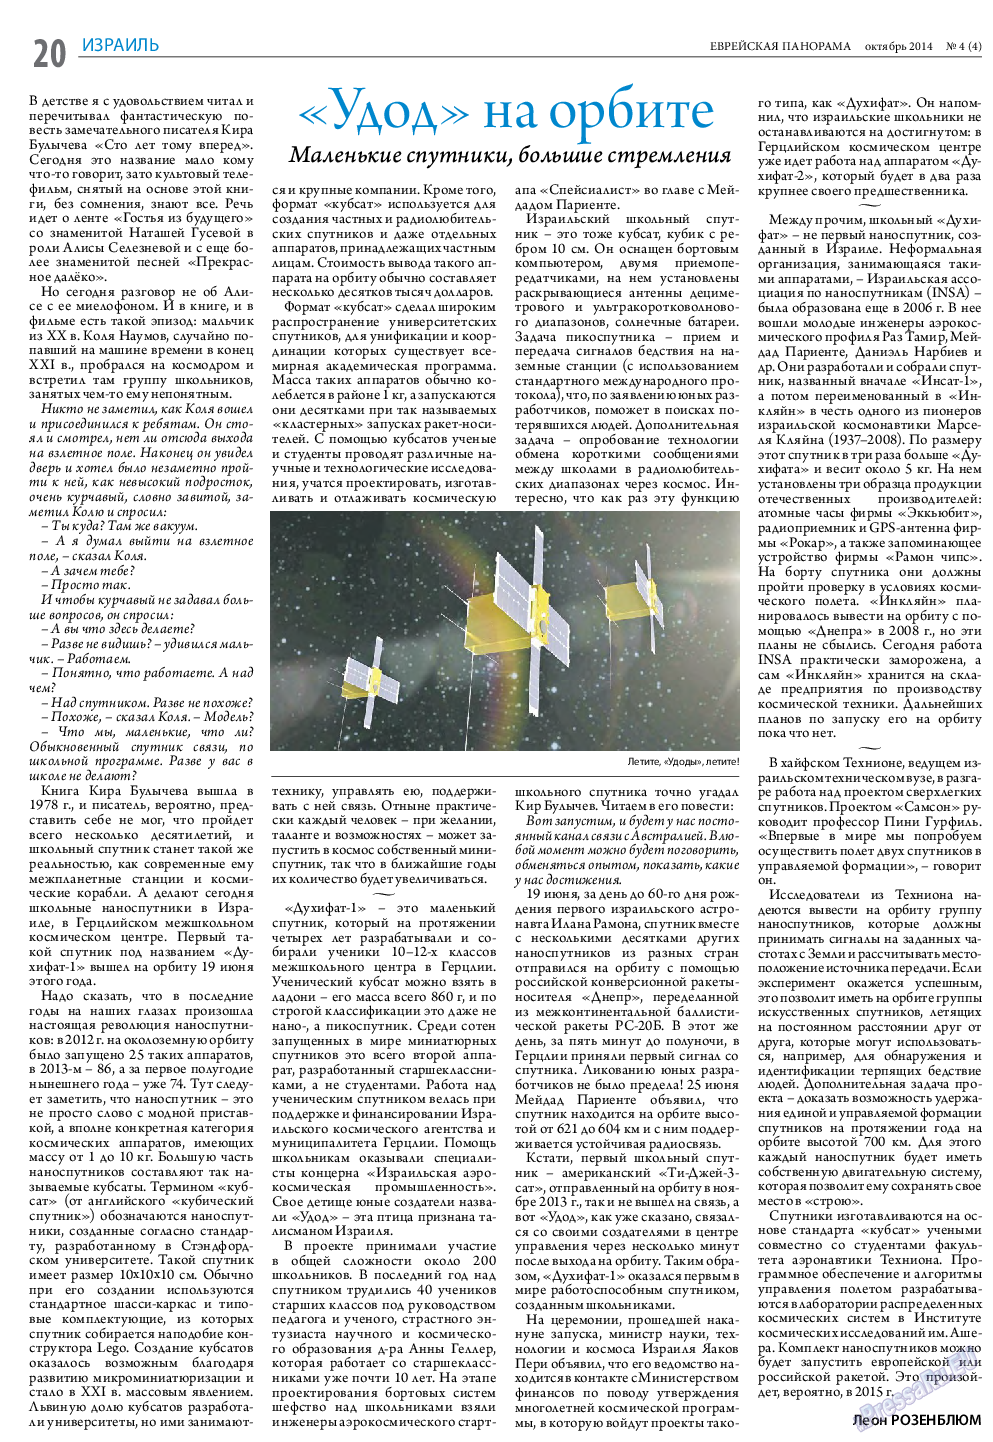 Еврейская панорама, газета. 2014 №4 стр.20